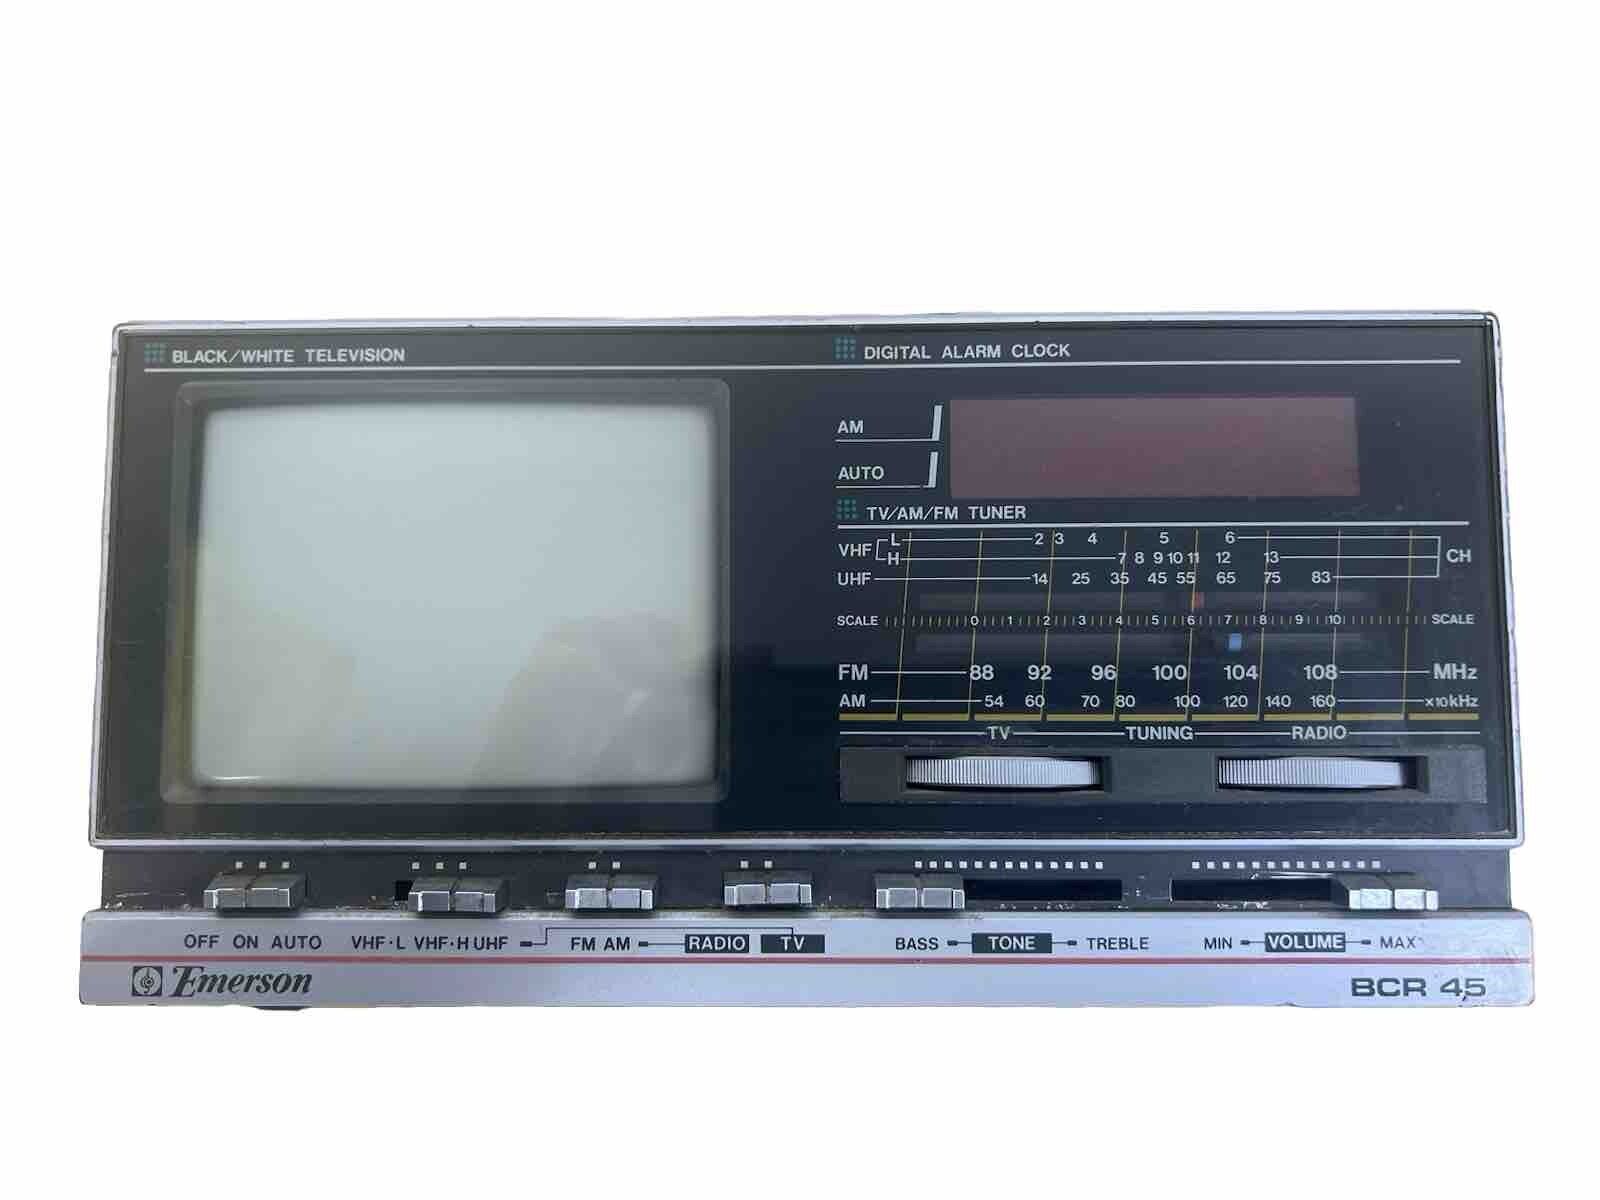 Vintage 1984 Emerson Mini Portable TV Radio Alarm Clock BCR 45